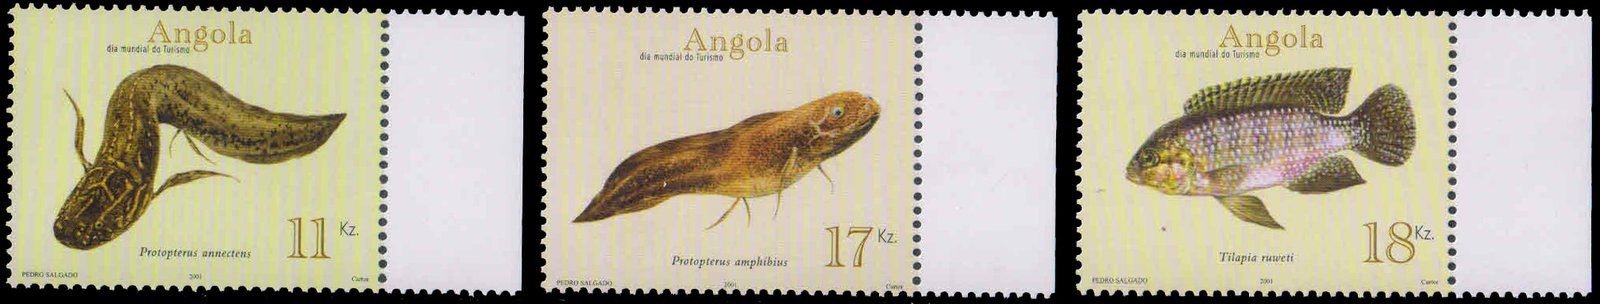 ANGOLA 2001-Freshwater Fishes, Set of 3, MNH, Cat £ 8-S.G. 1620-22